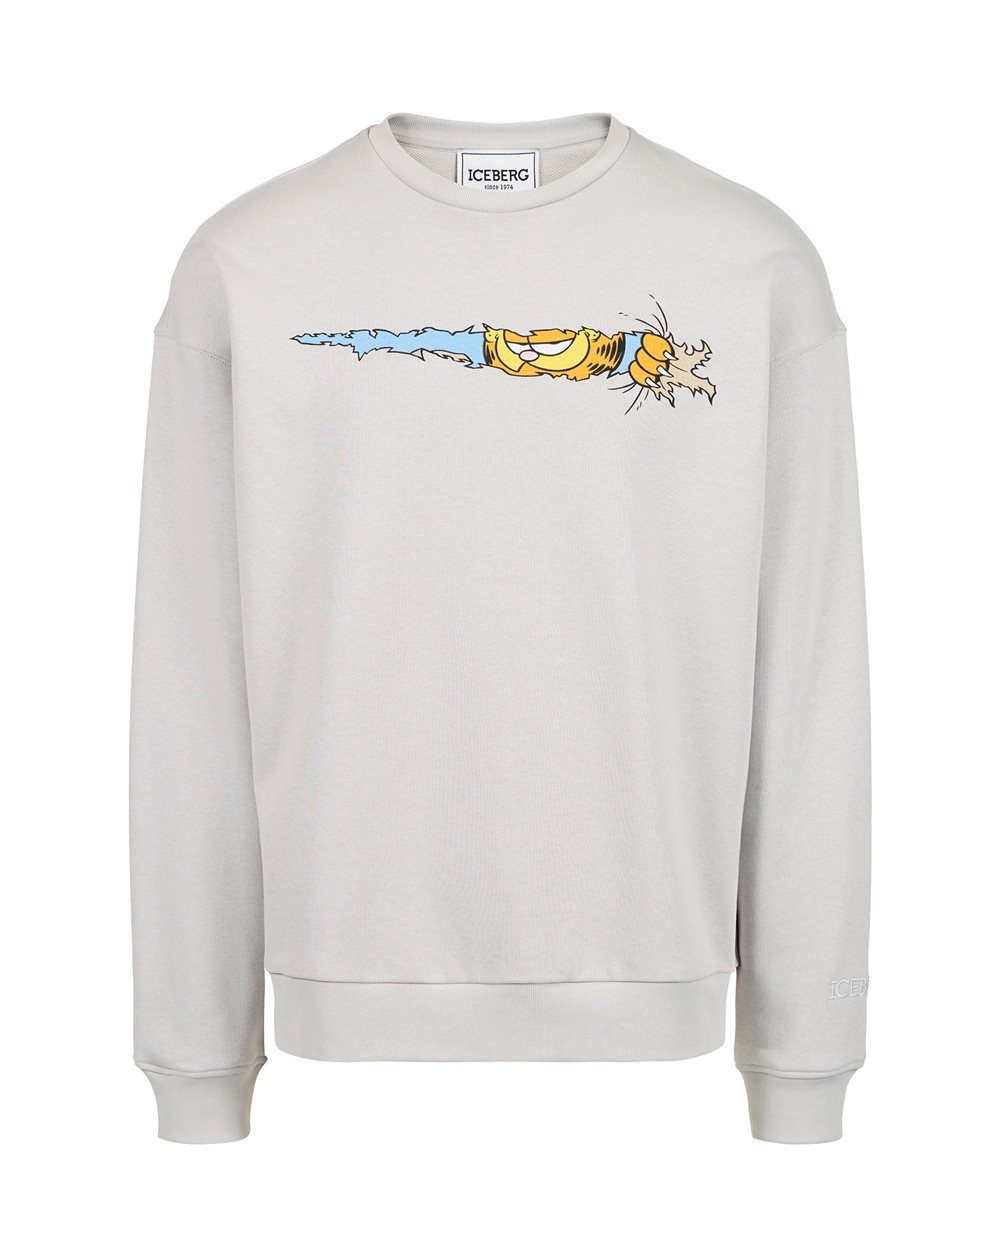 Crewneck sweatshirt with Garfield print - carosello preview uomo | Iceberg - Official Website